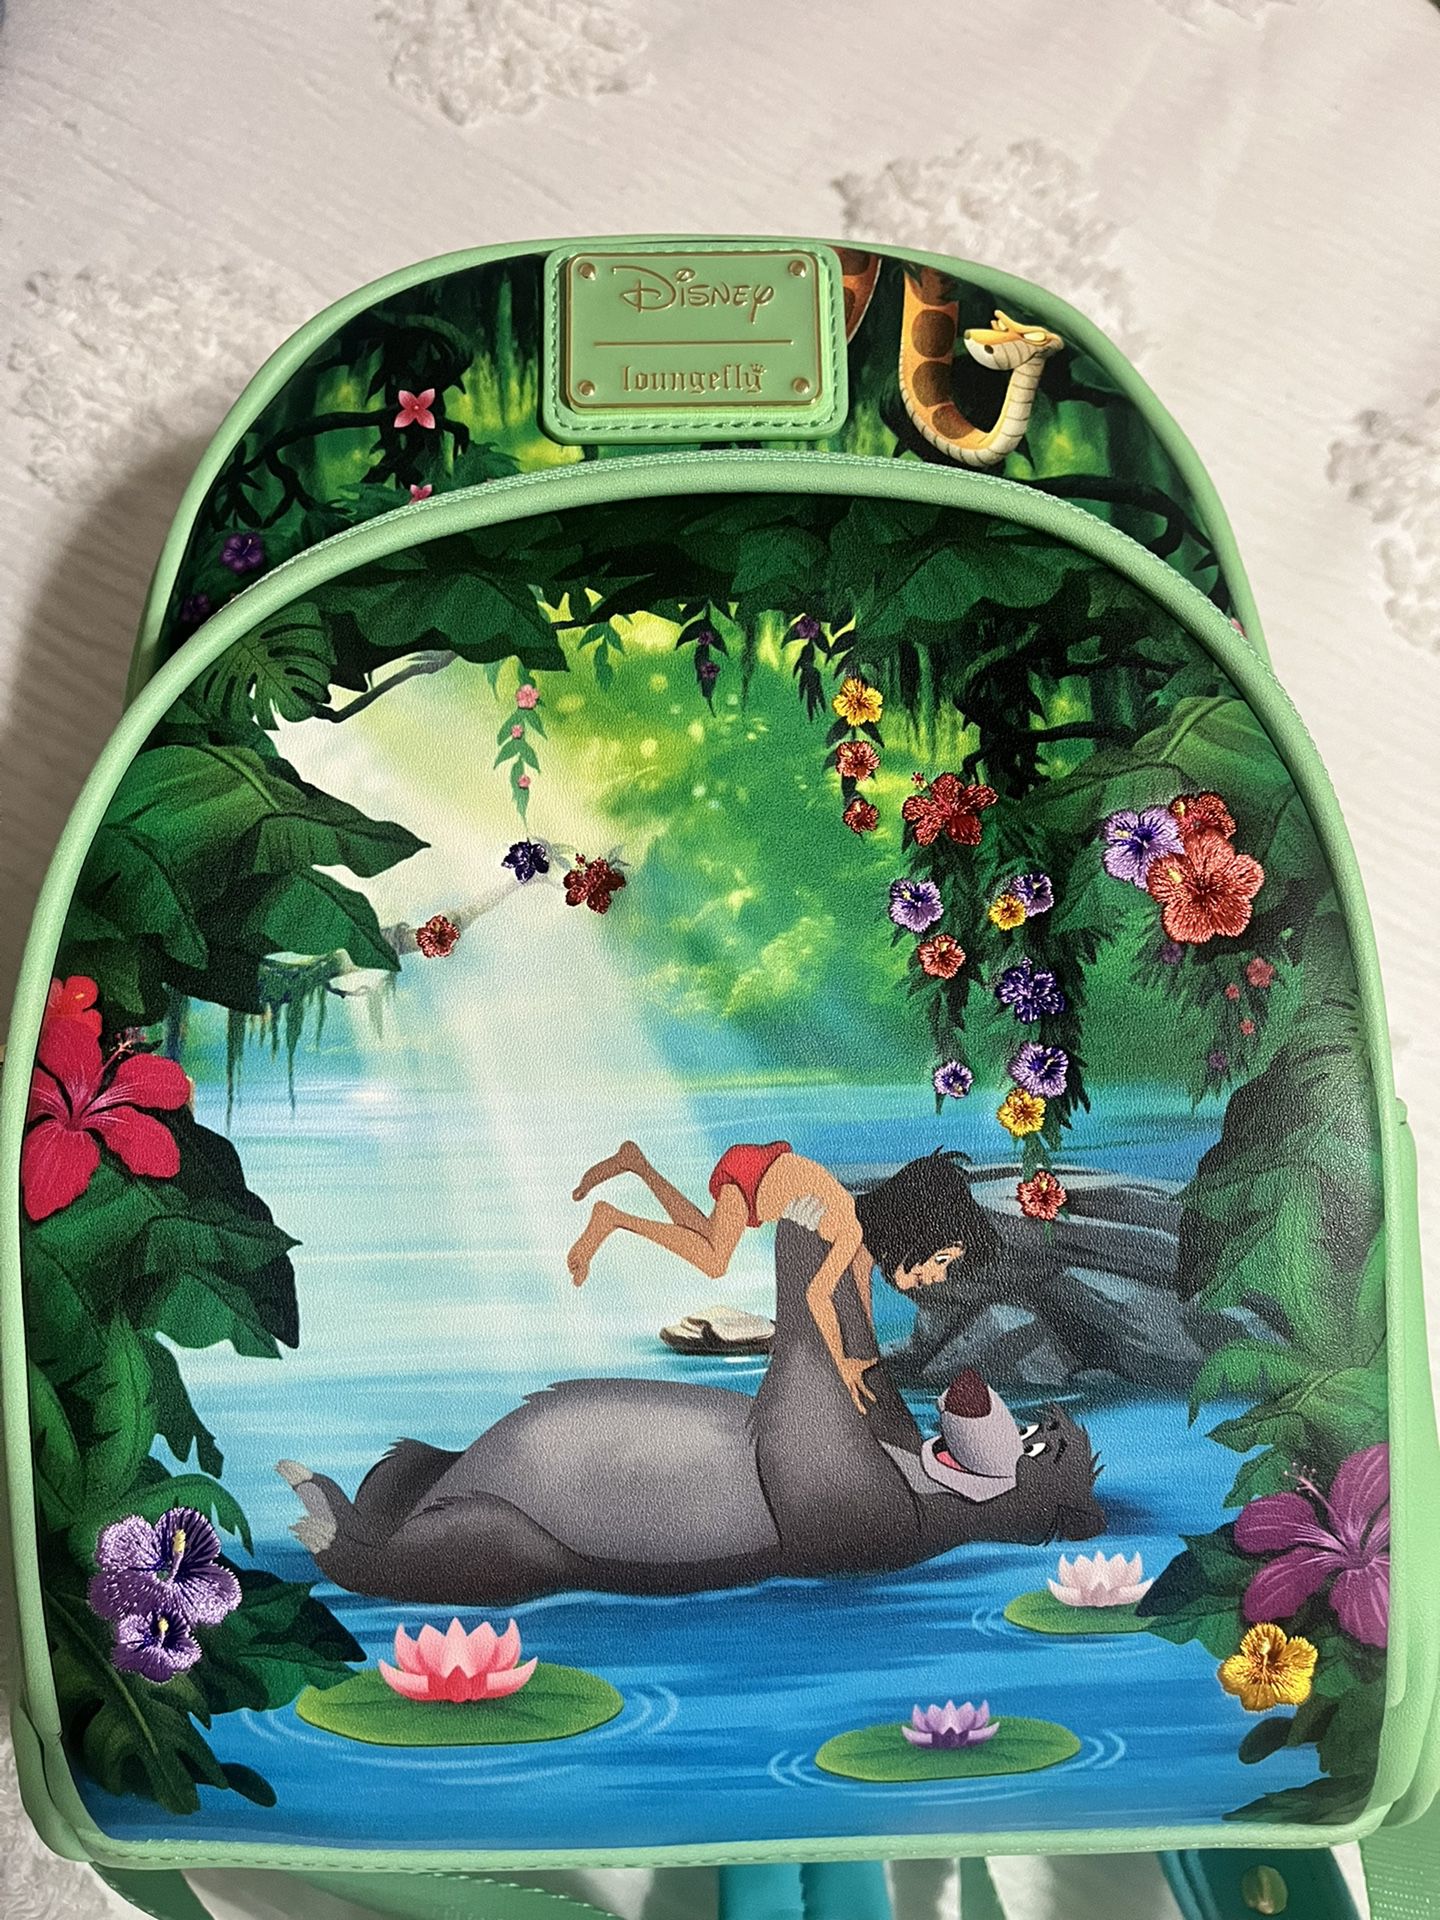 Disney Jungle Book Lounge Fly Backpack 